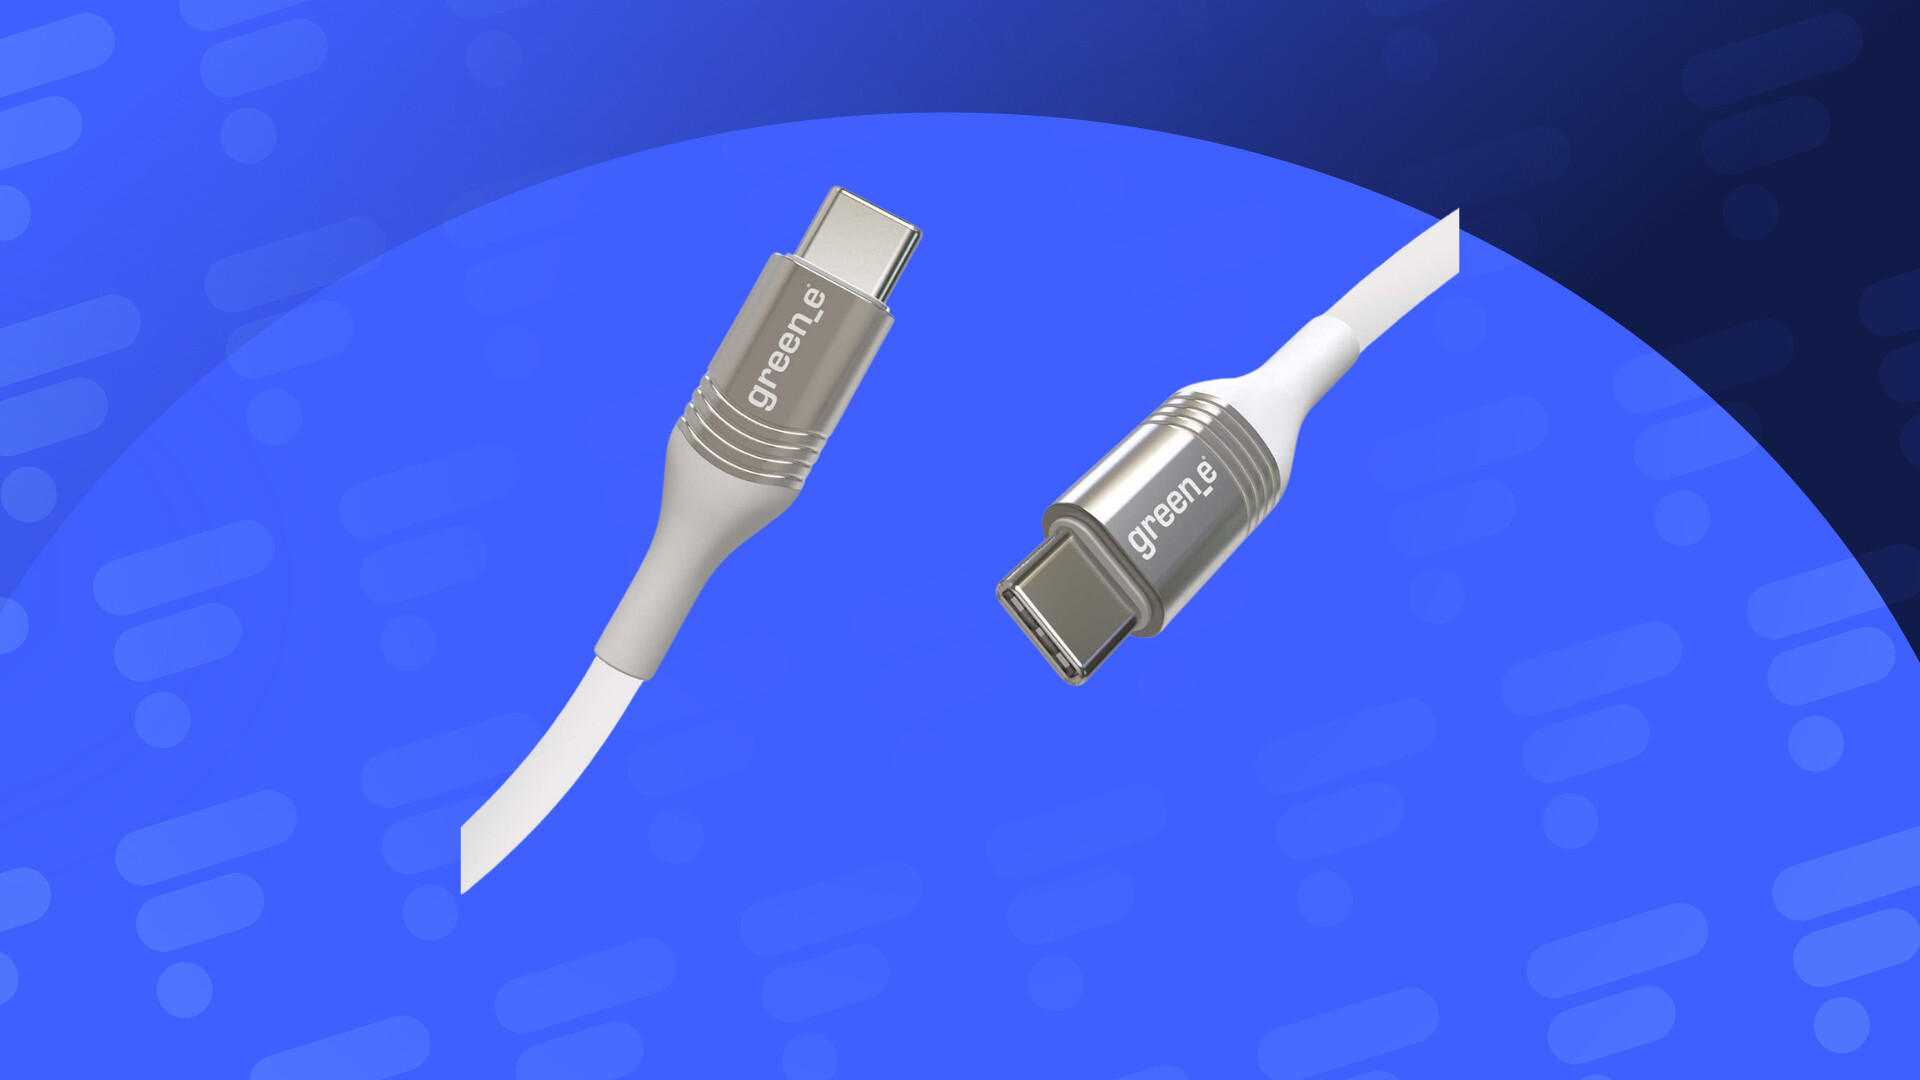 Câble tressé Violet & Jaune USB-C